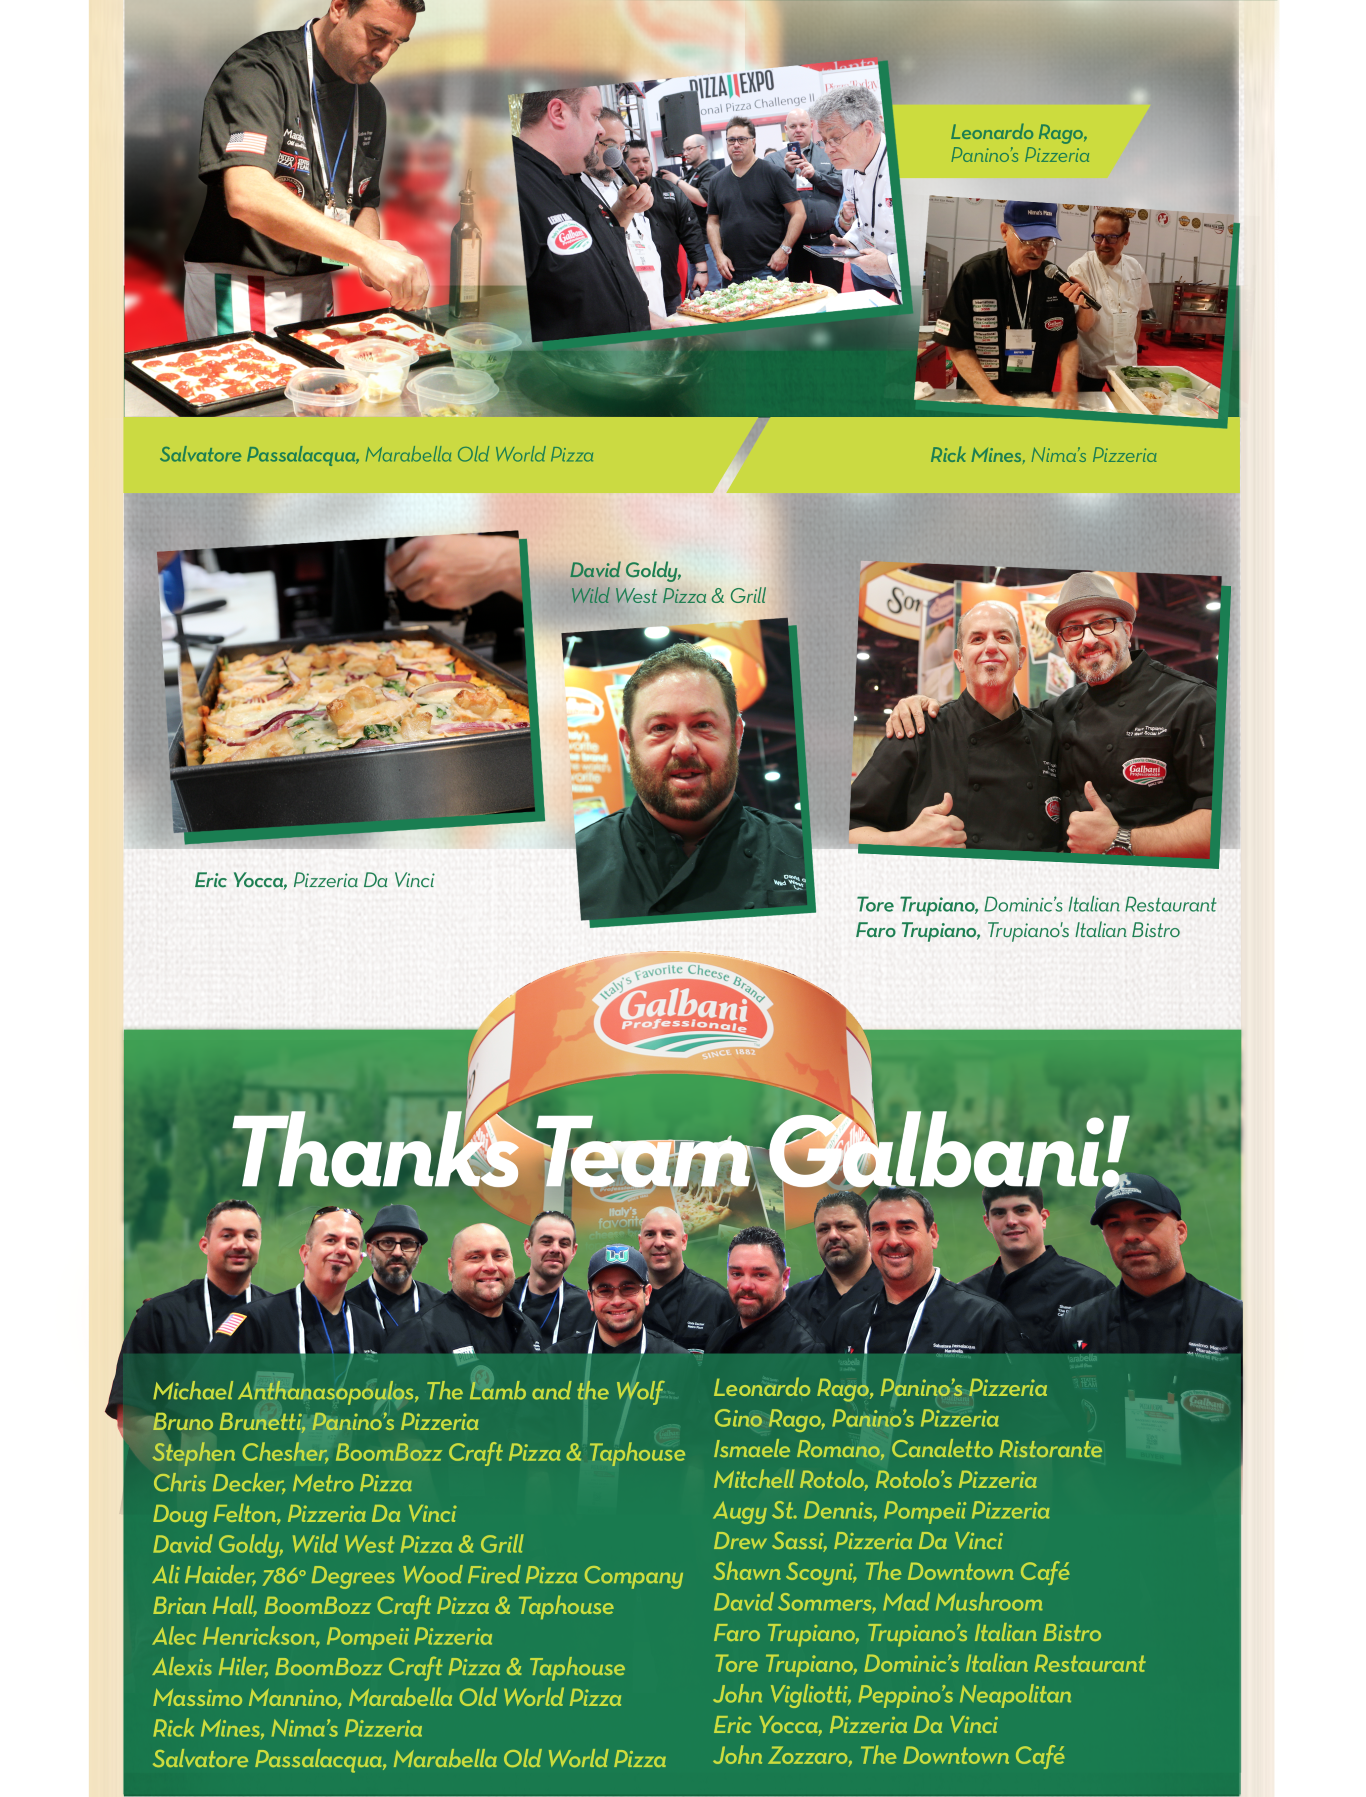 Thanks Team Galbani!